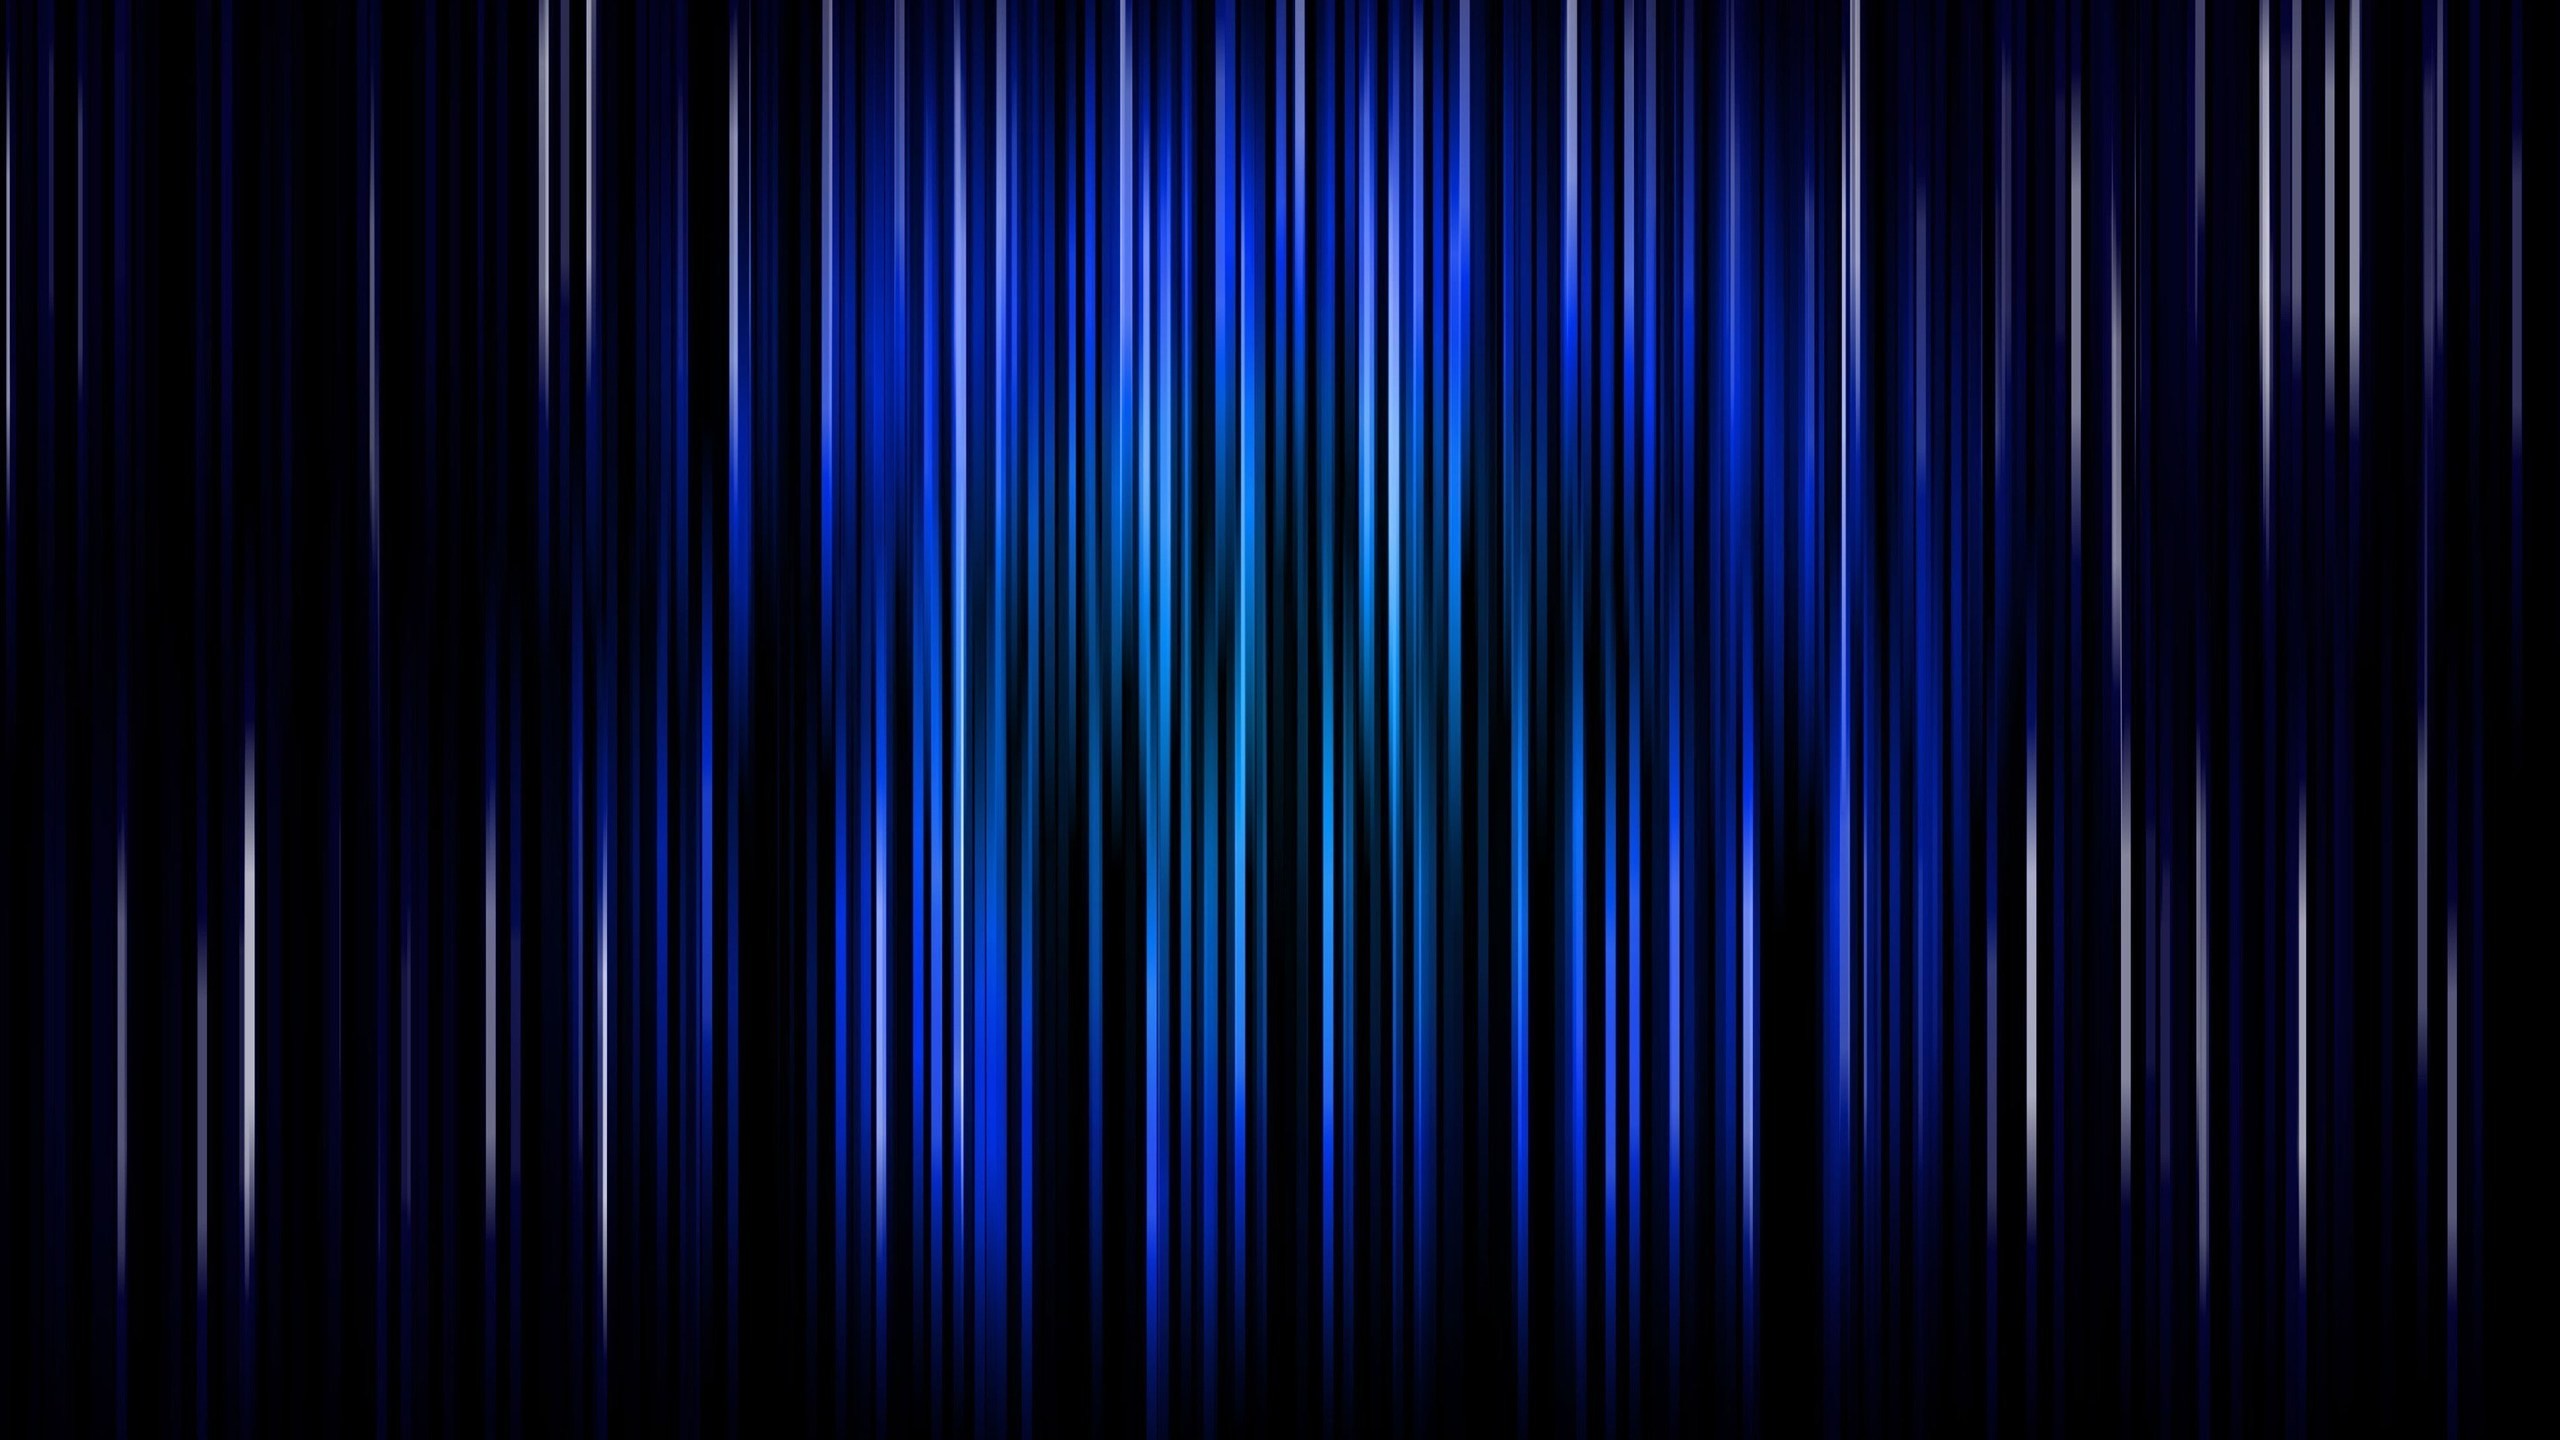 fond d'écran pixel art,bleu,noir,bleu électrique,violet,bleu cobalt